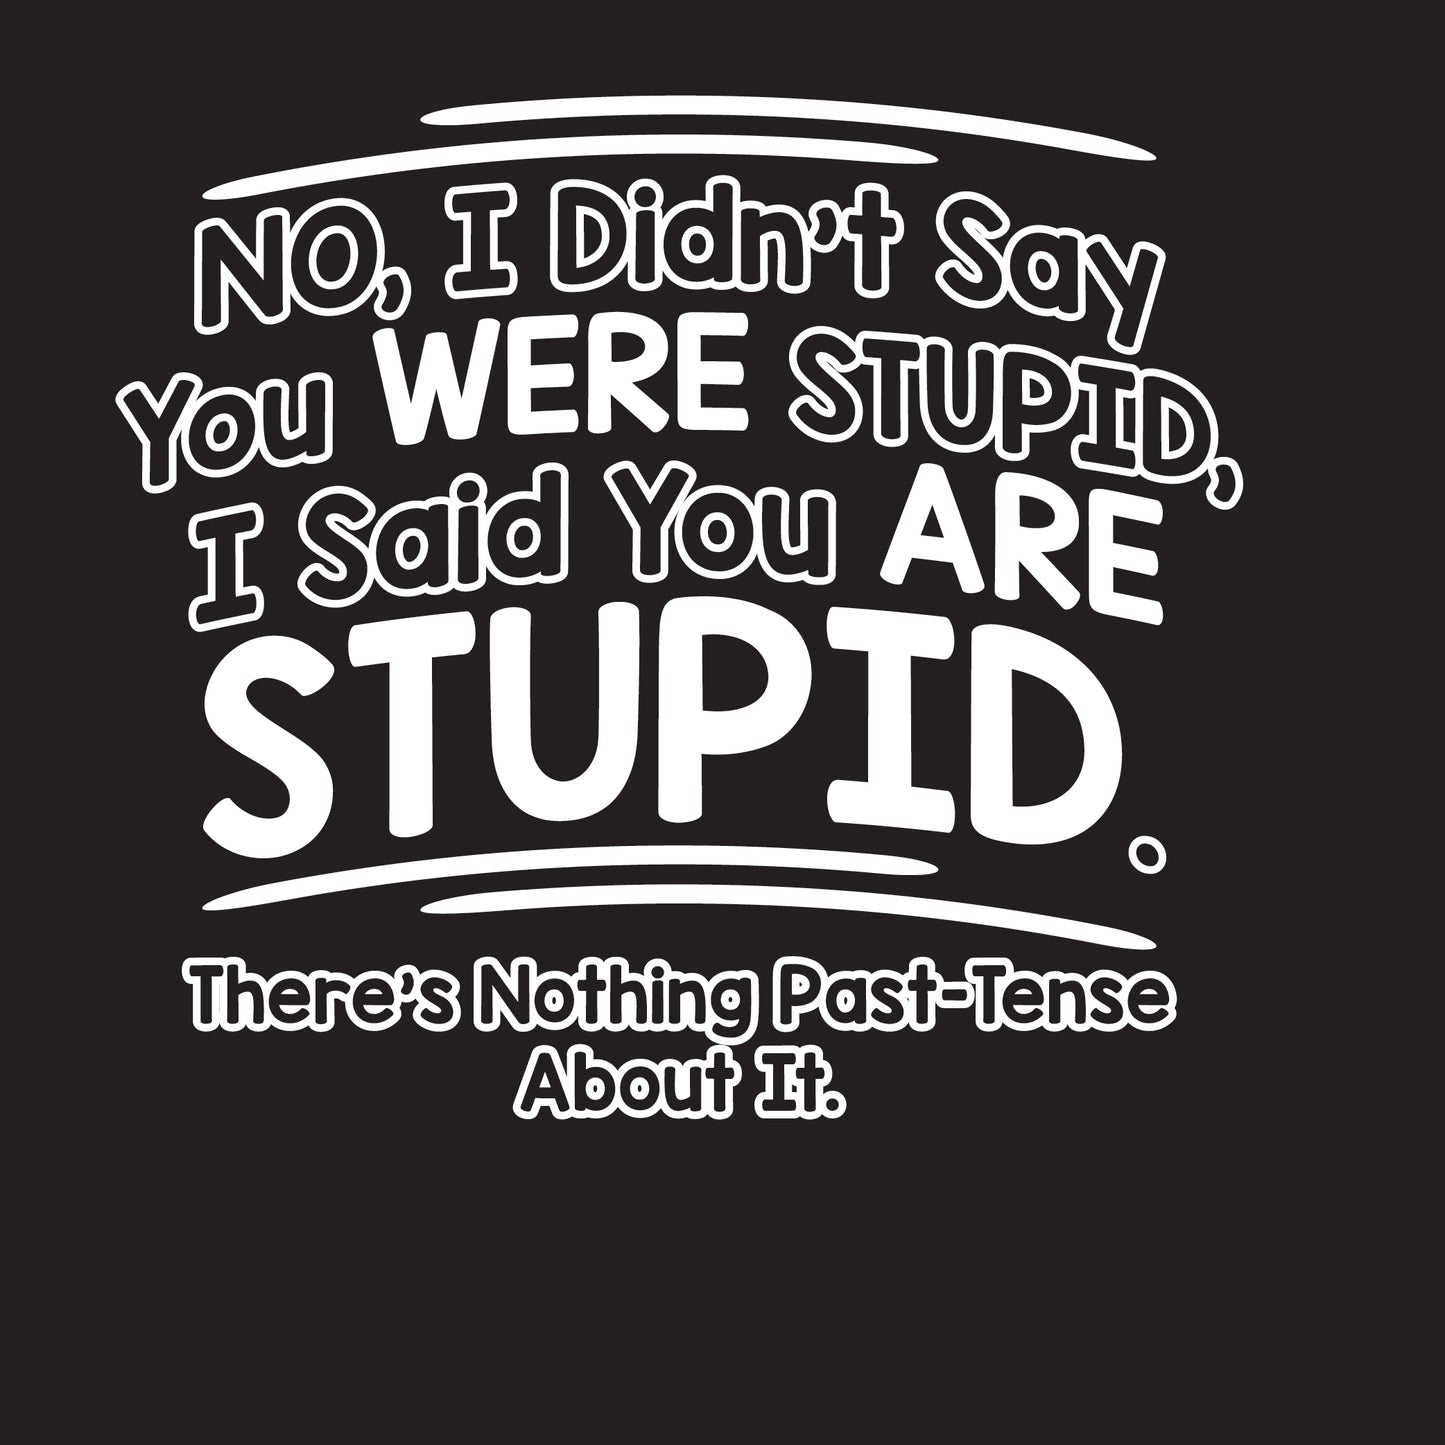 I Didn't Say You Were Stupid, I Said You Are Stupid